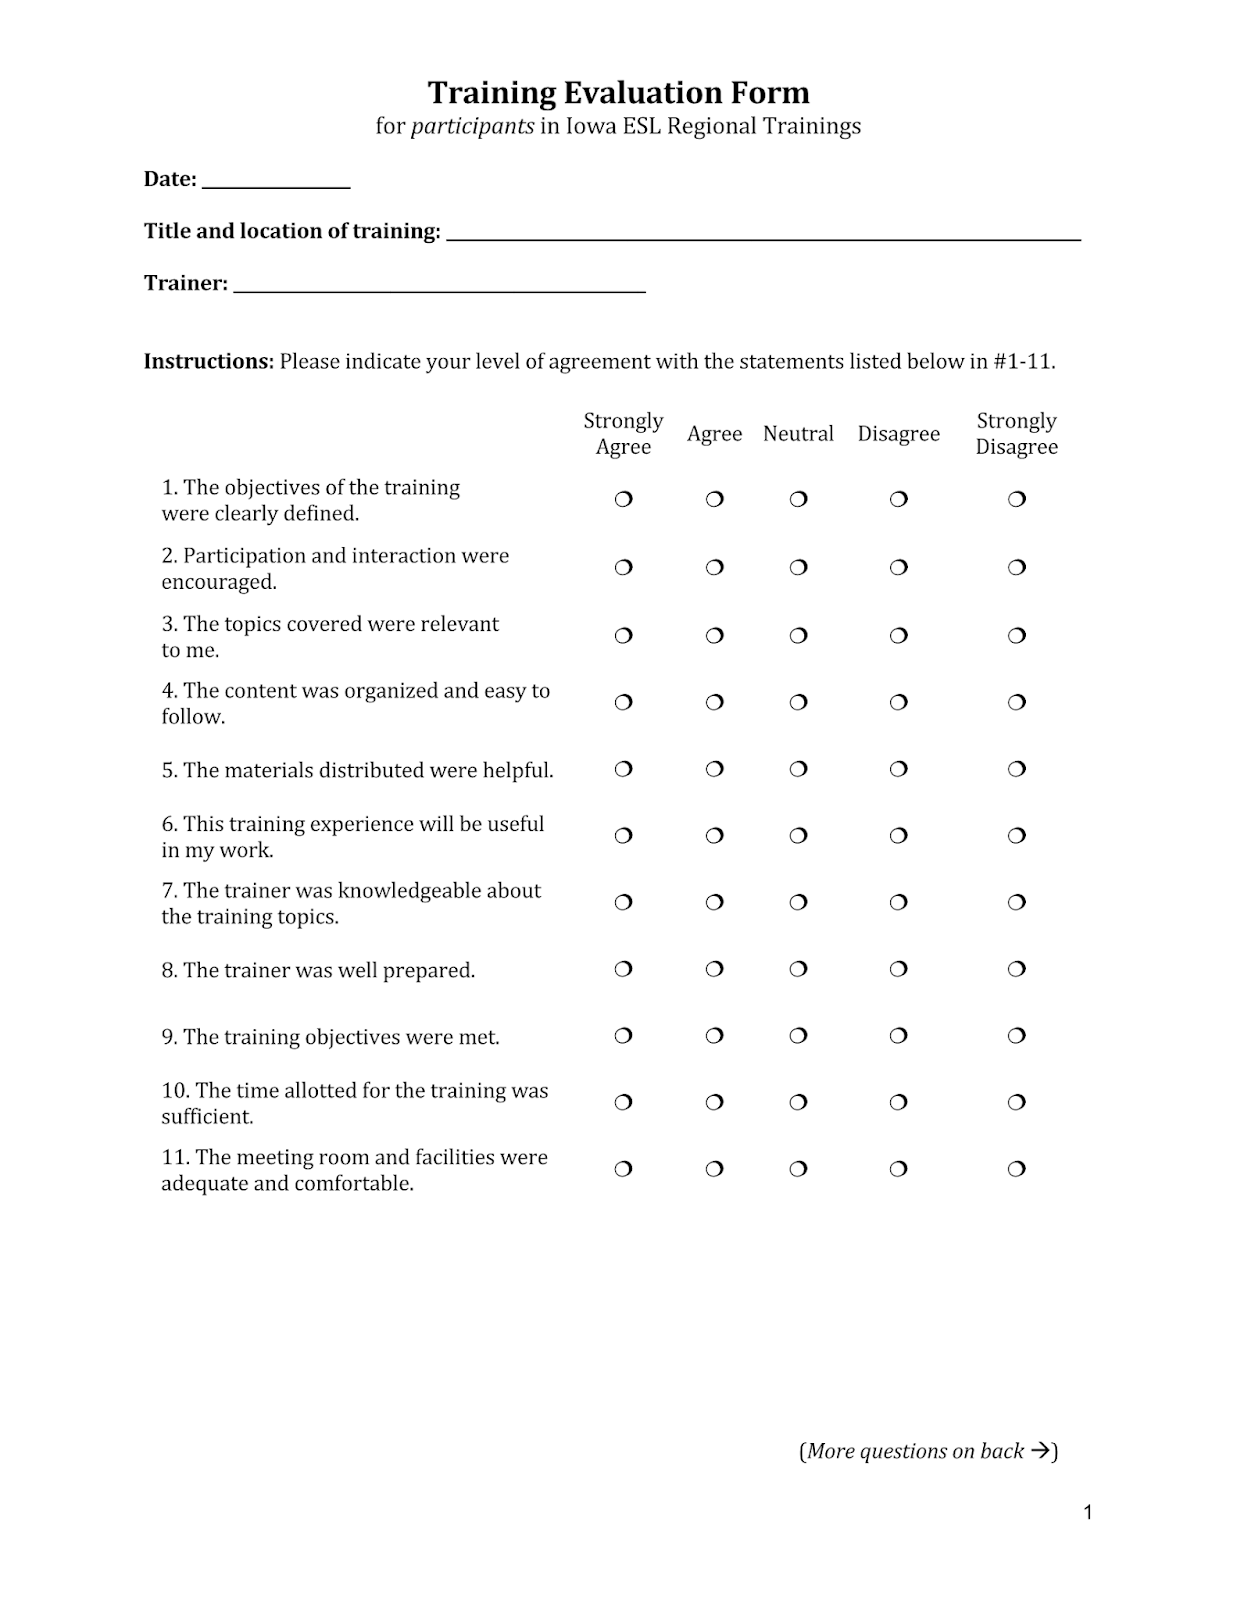 pdf-training-evaluation-form-download-in-pdf-format